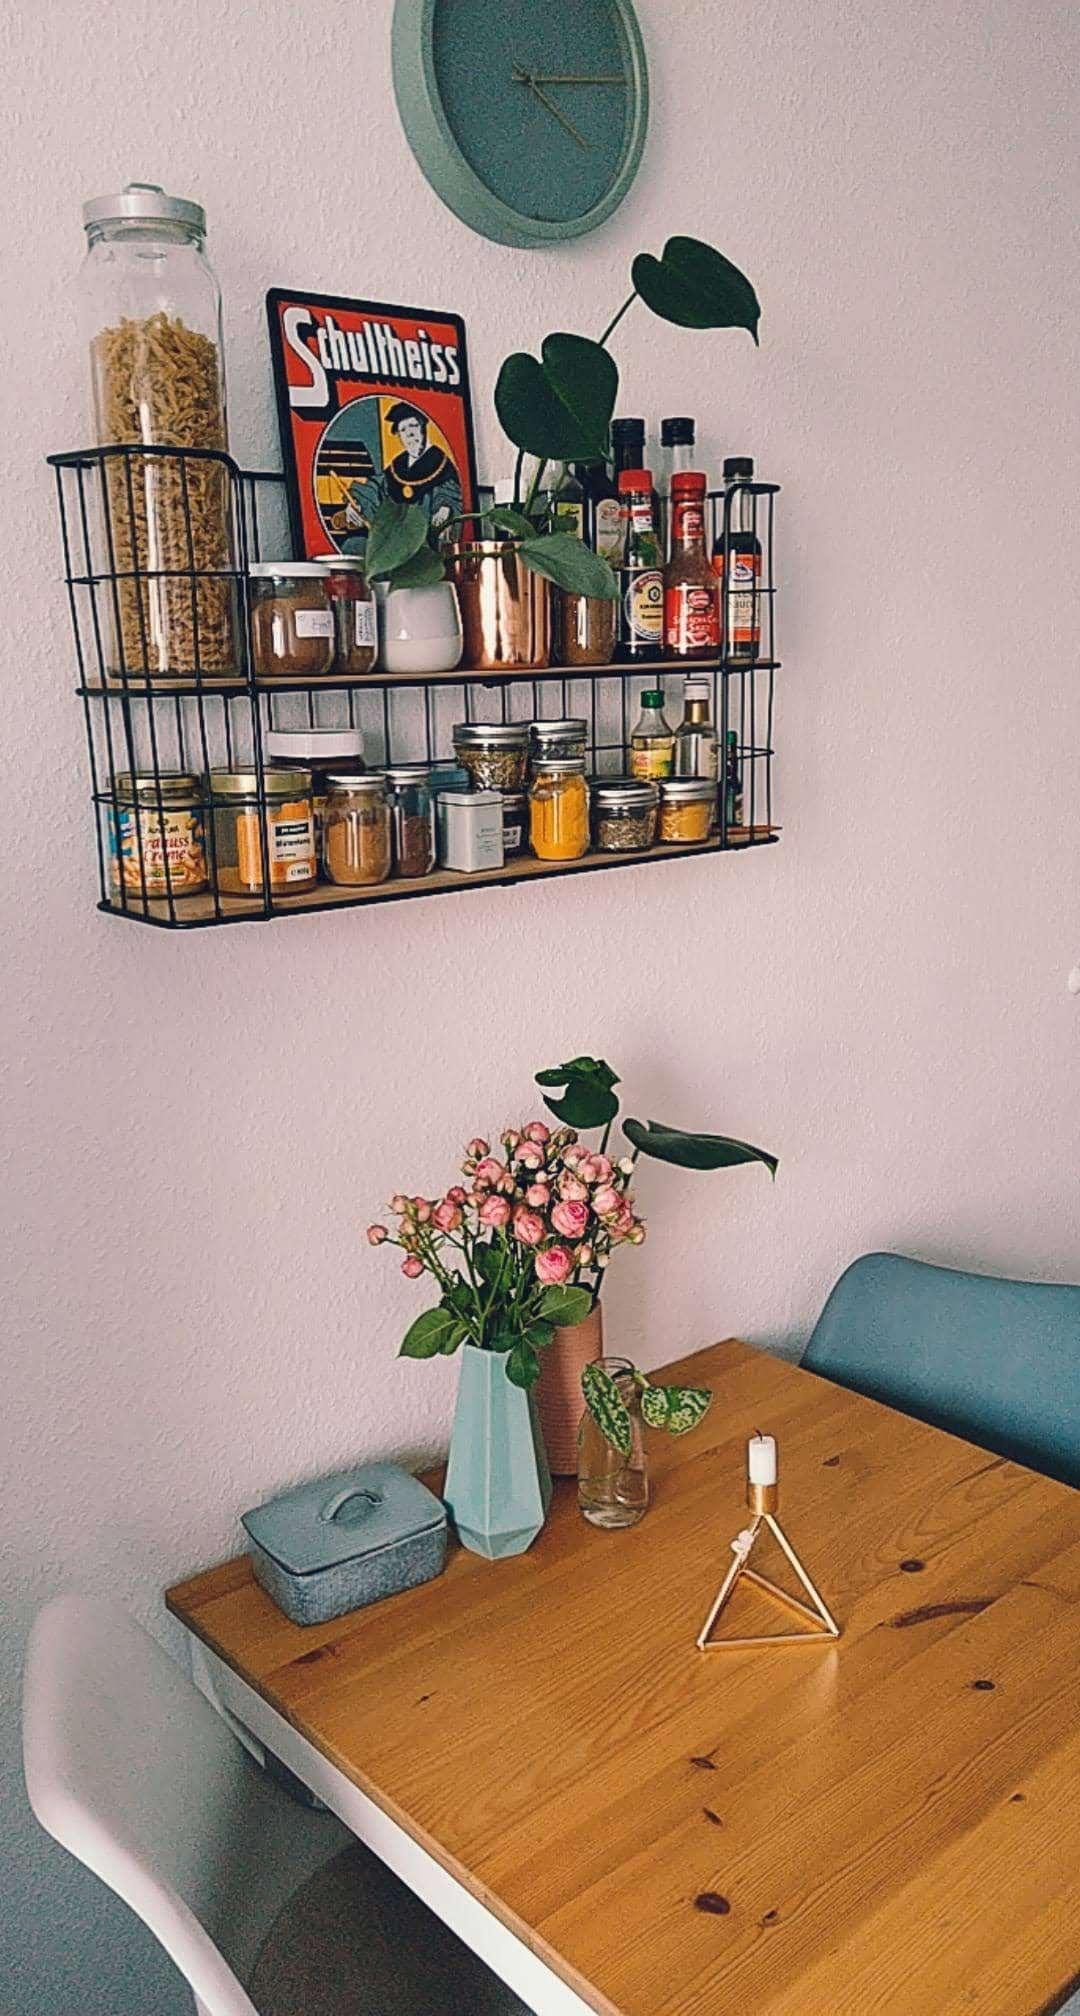 roses
#mornings #kitchen #roses #breakfast #table #home #scandi 